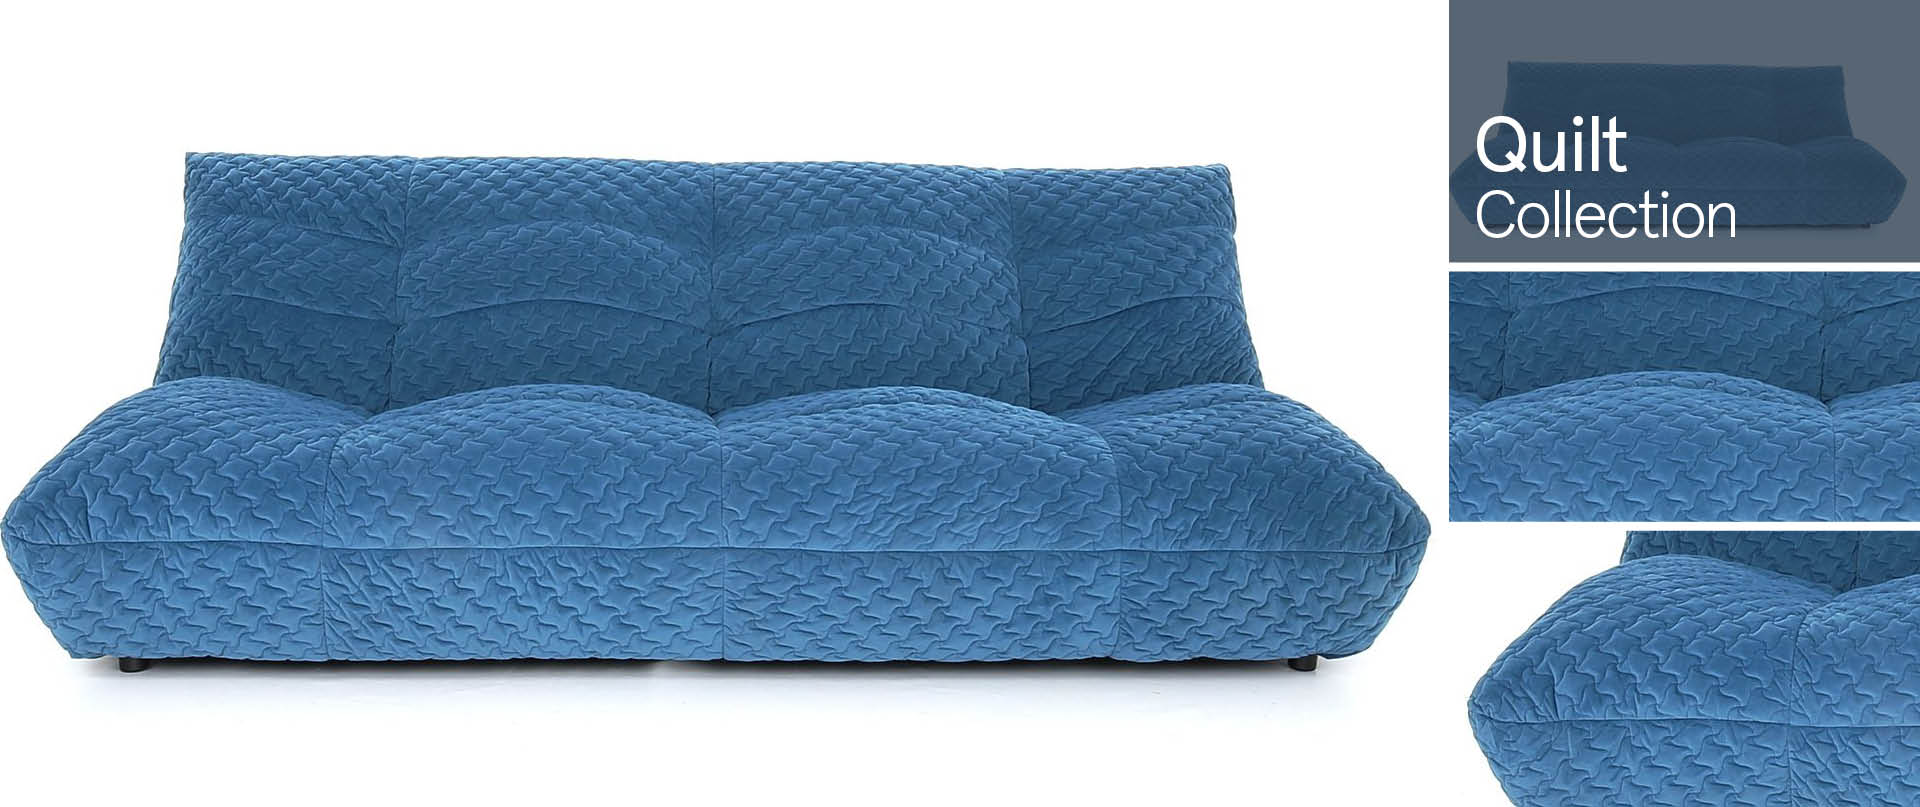 Quilt All Fabric Sofa Ranges